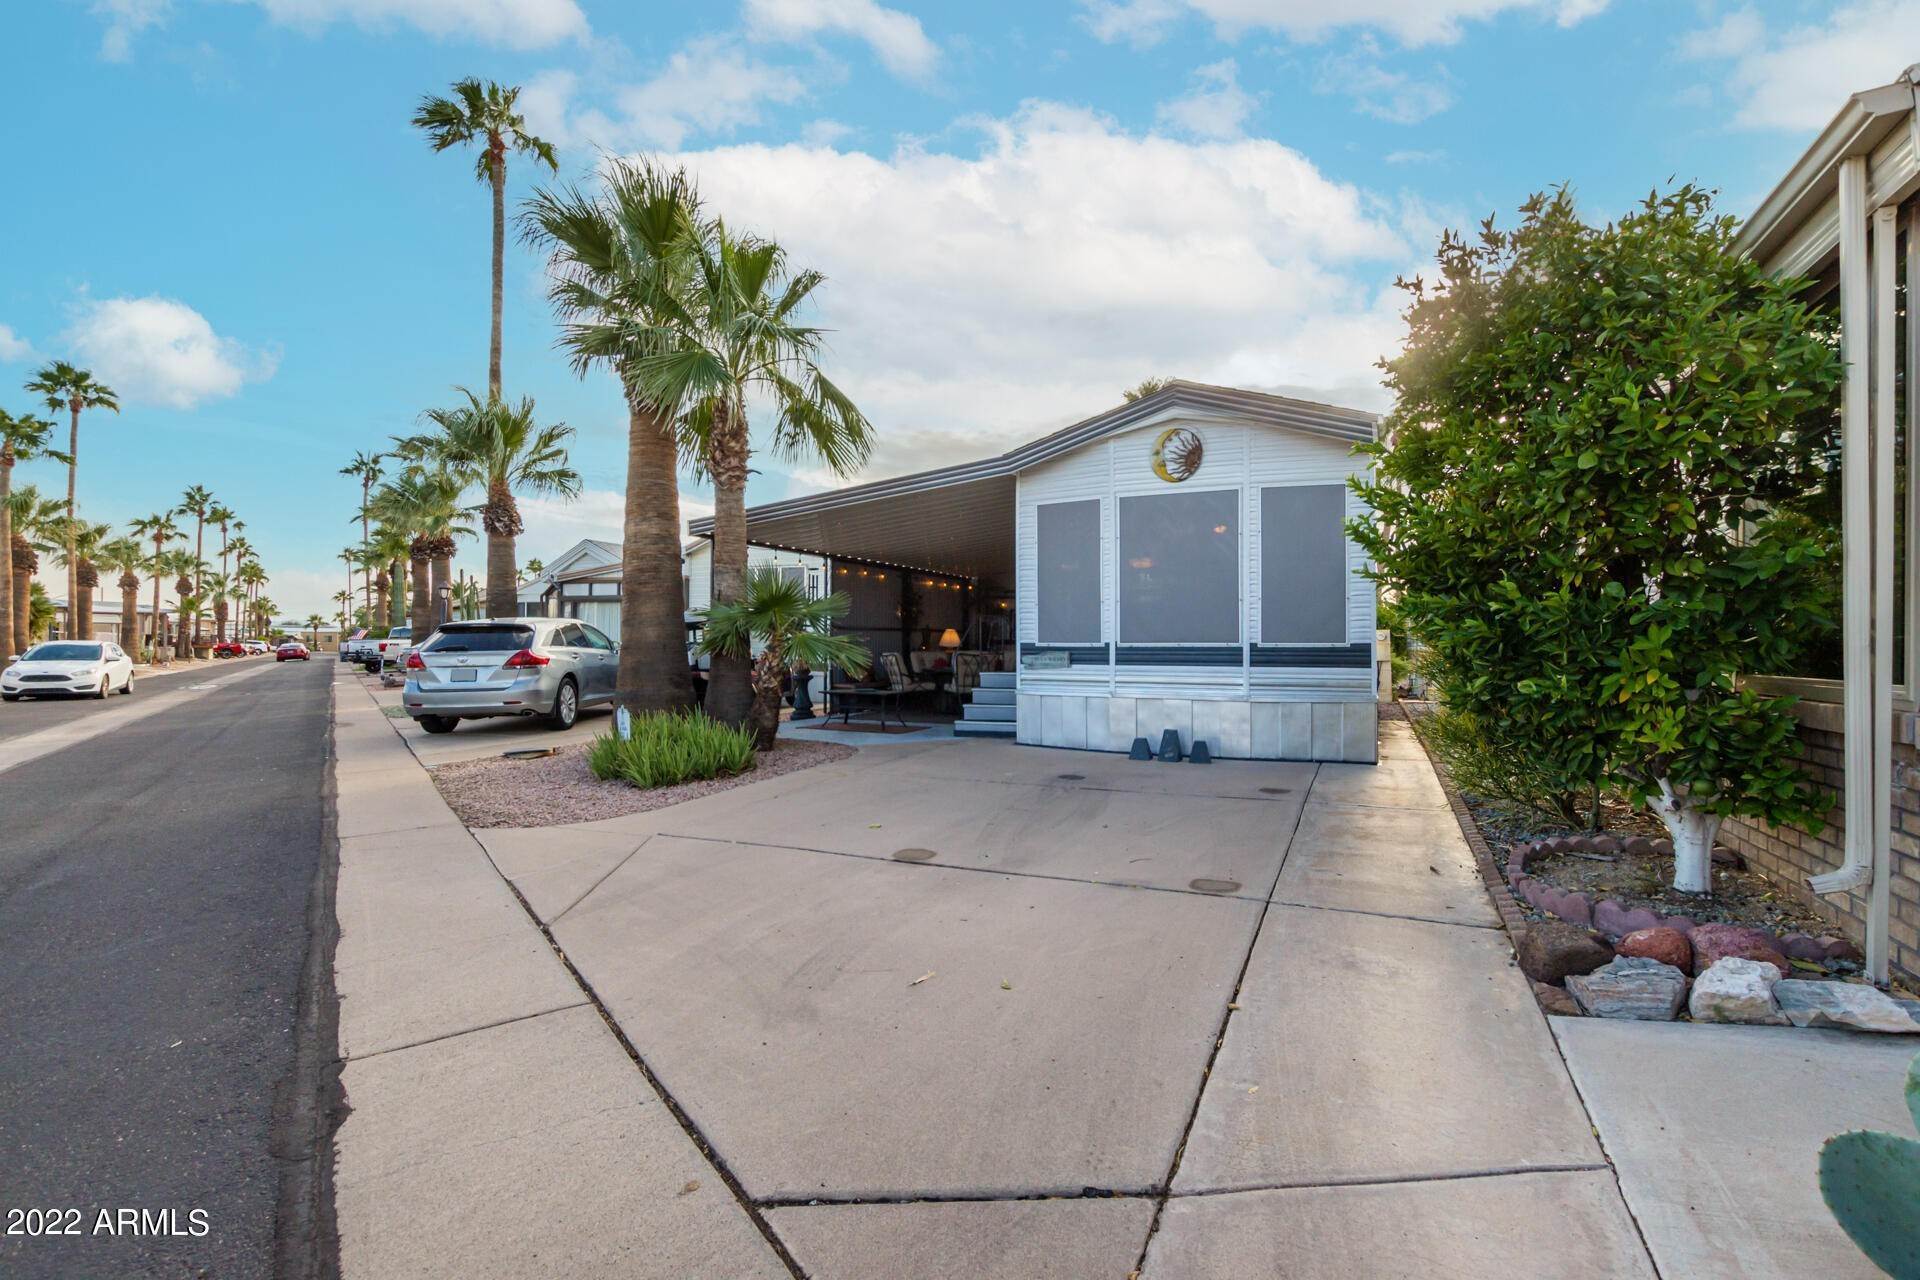 46. Mobile Home for Sale at Mesa, AZ 85205